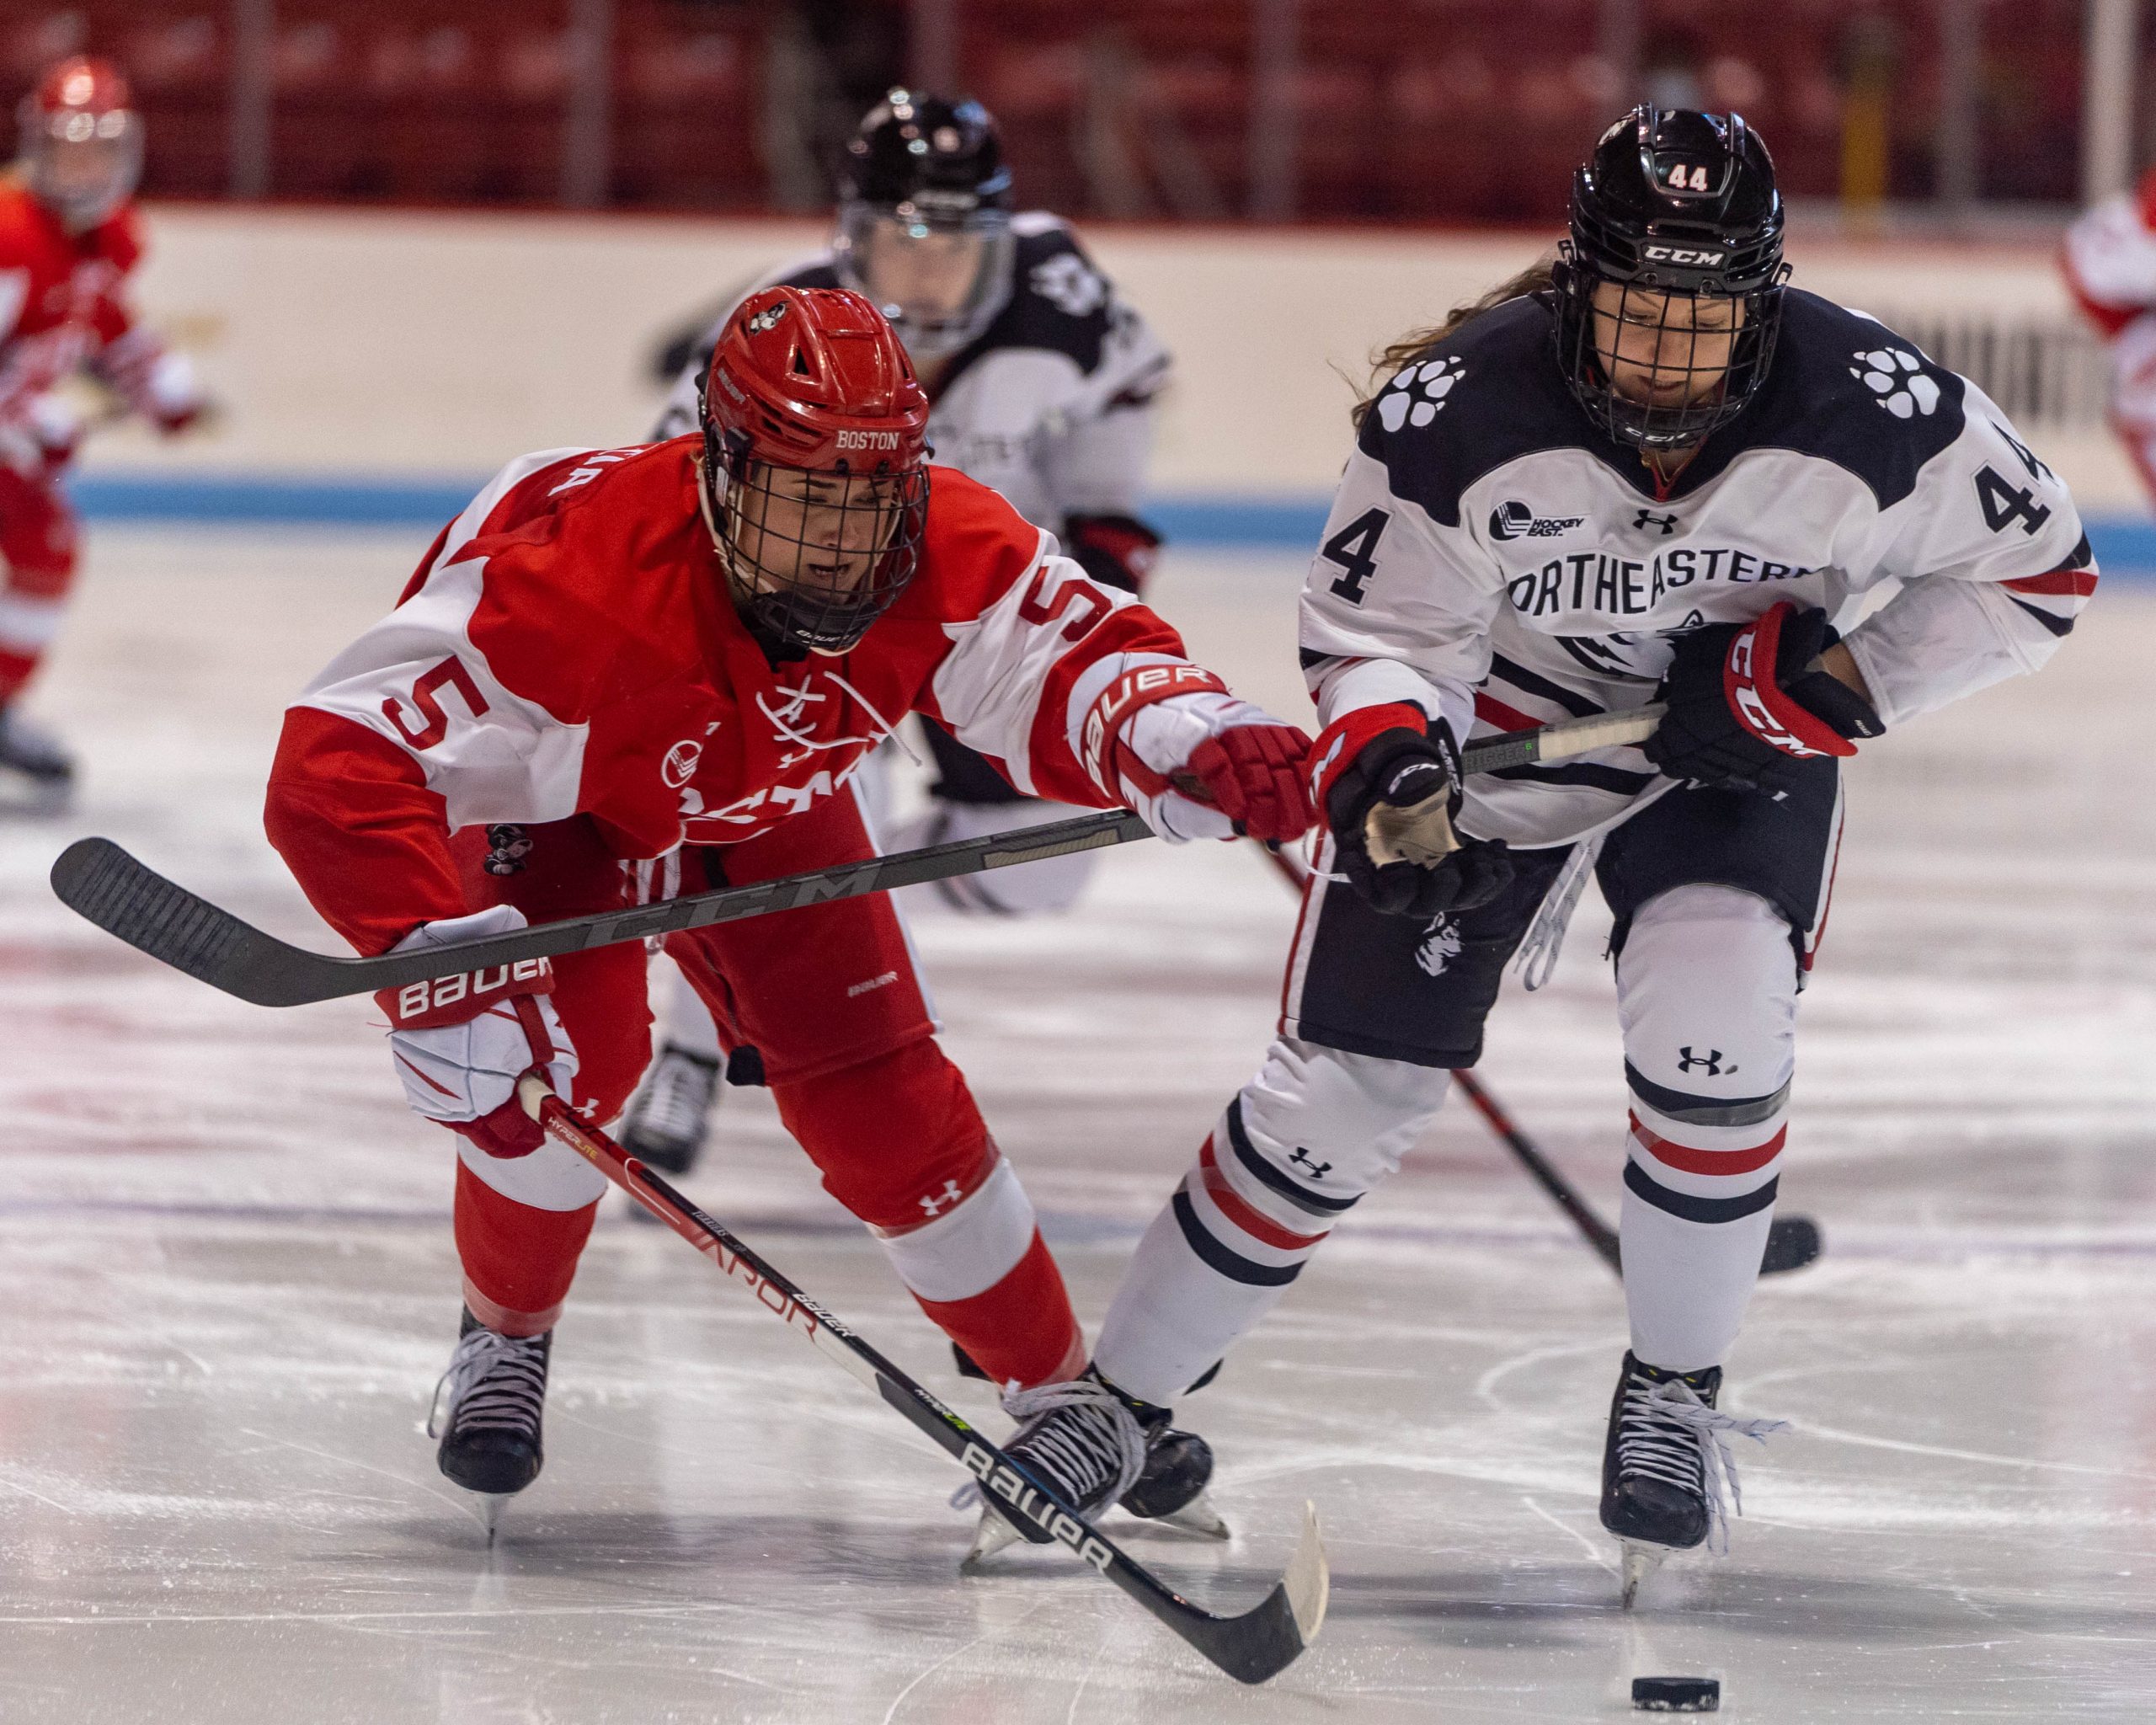 Photo Gallery: Women's Hockey falls short in Beanpot consolation